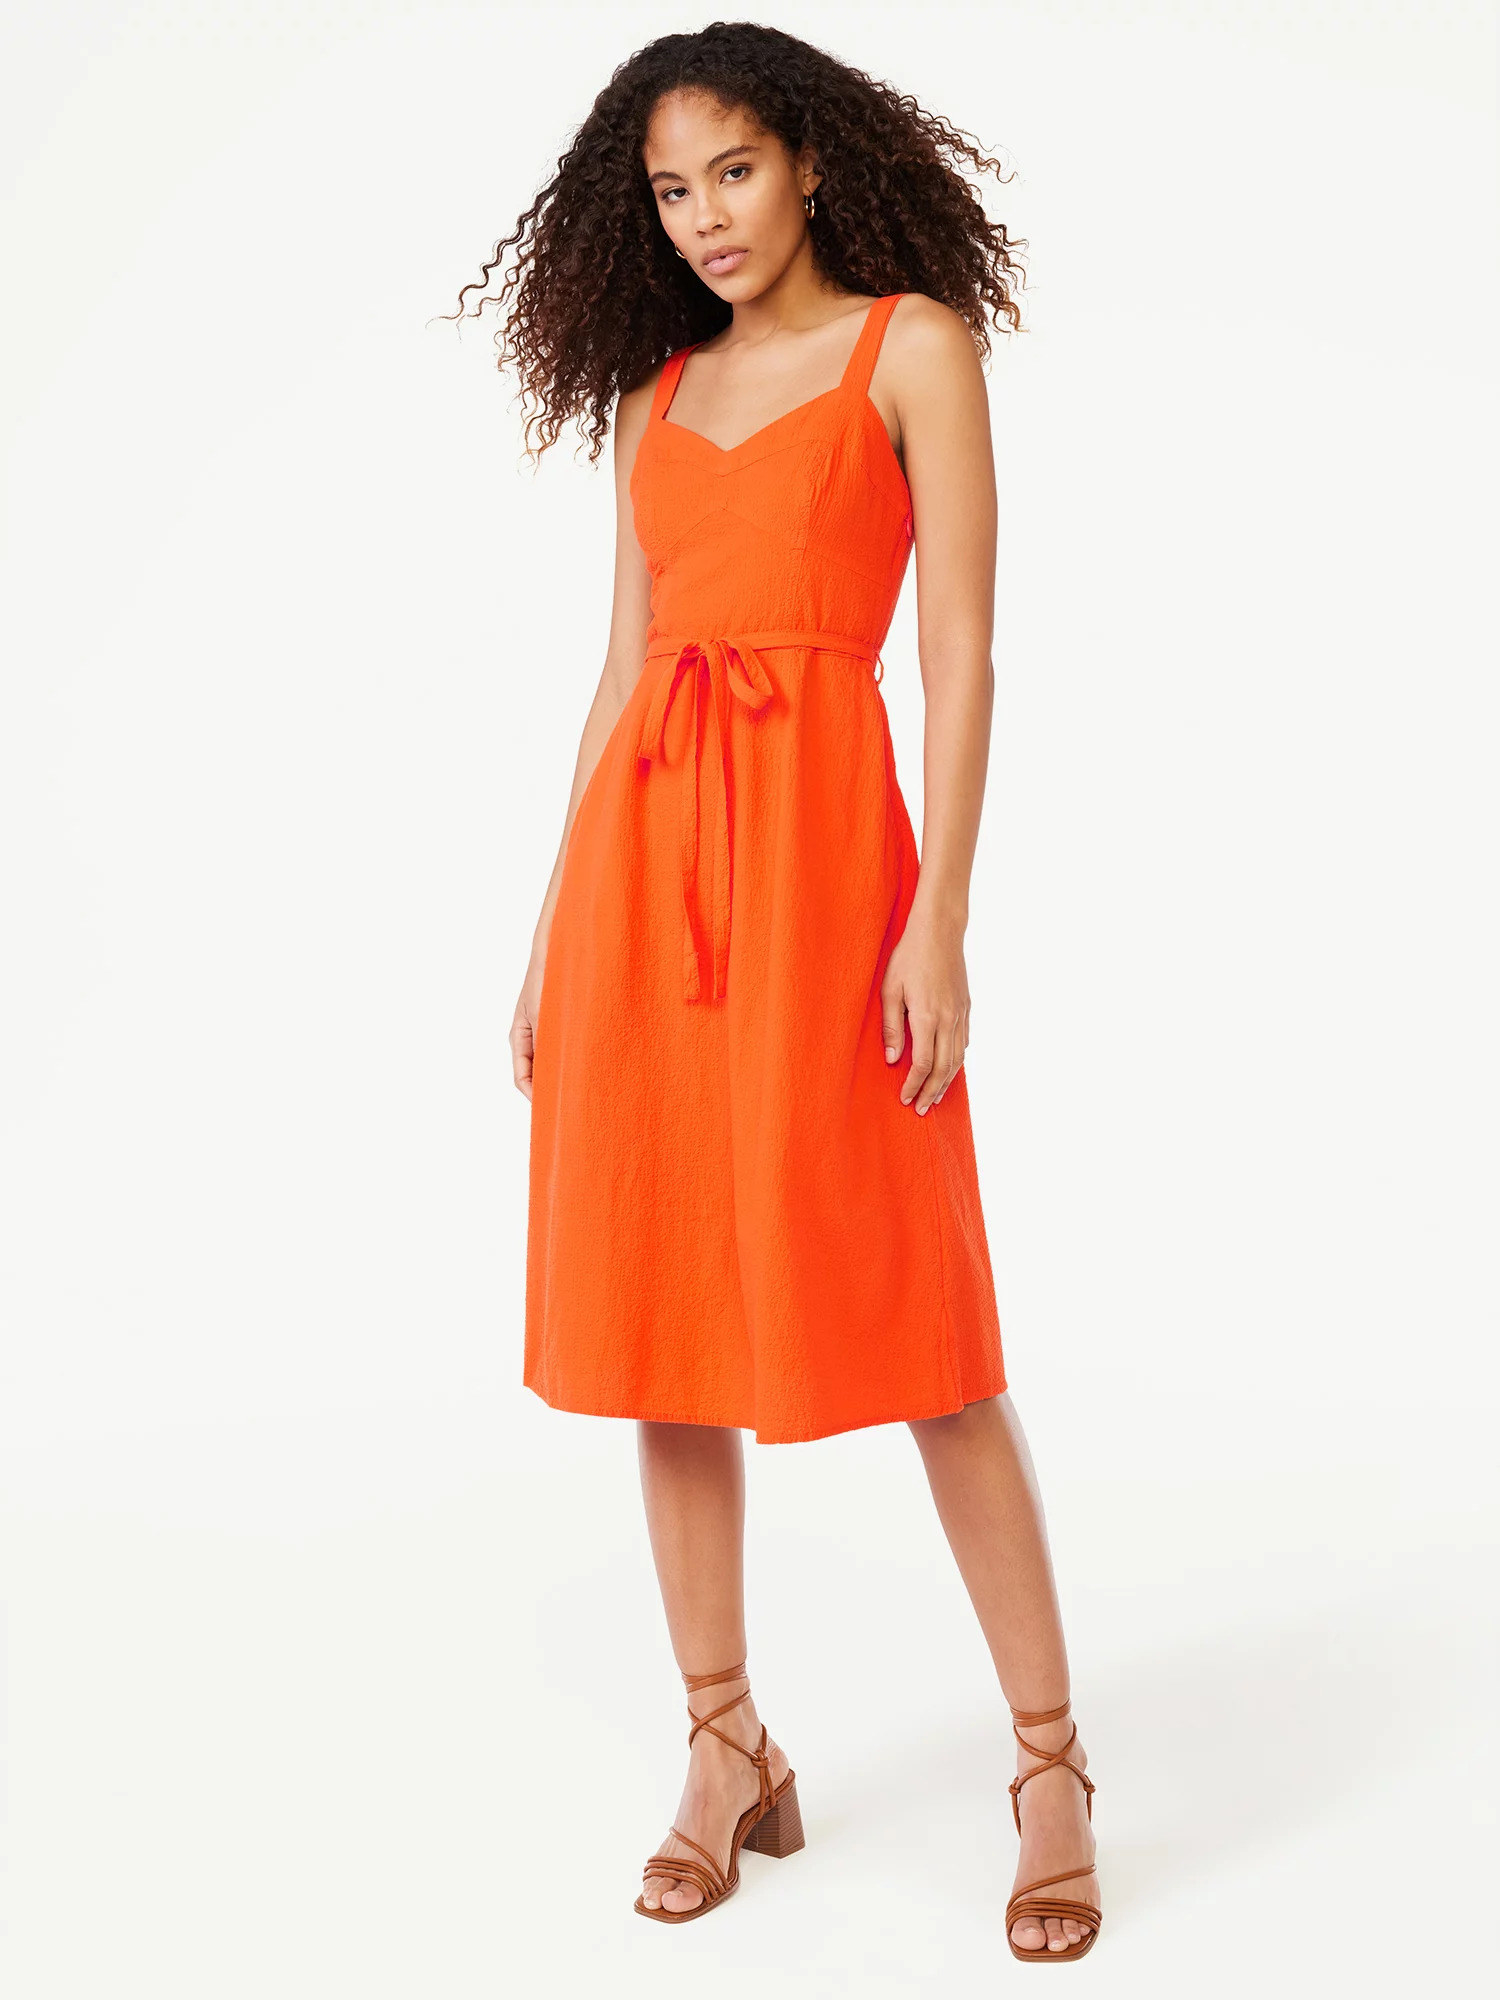 Model wearing the tangerine tango dress